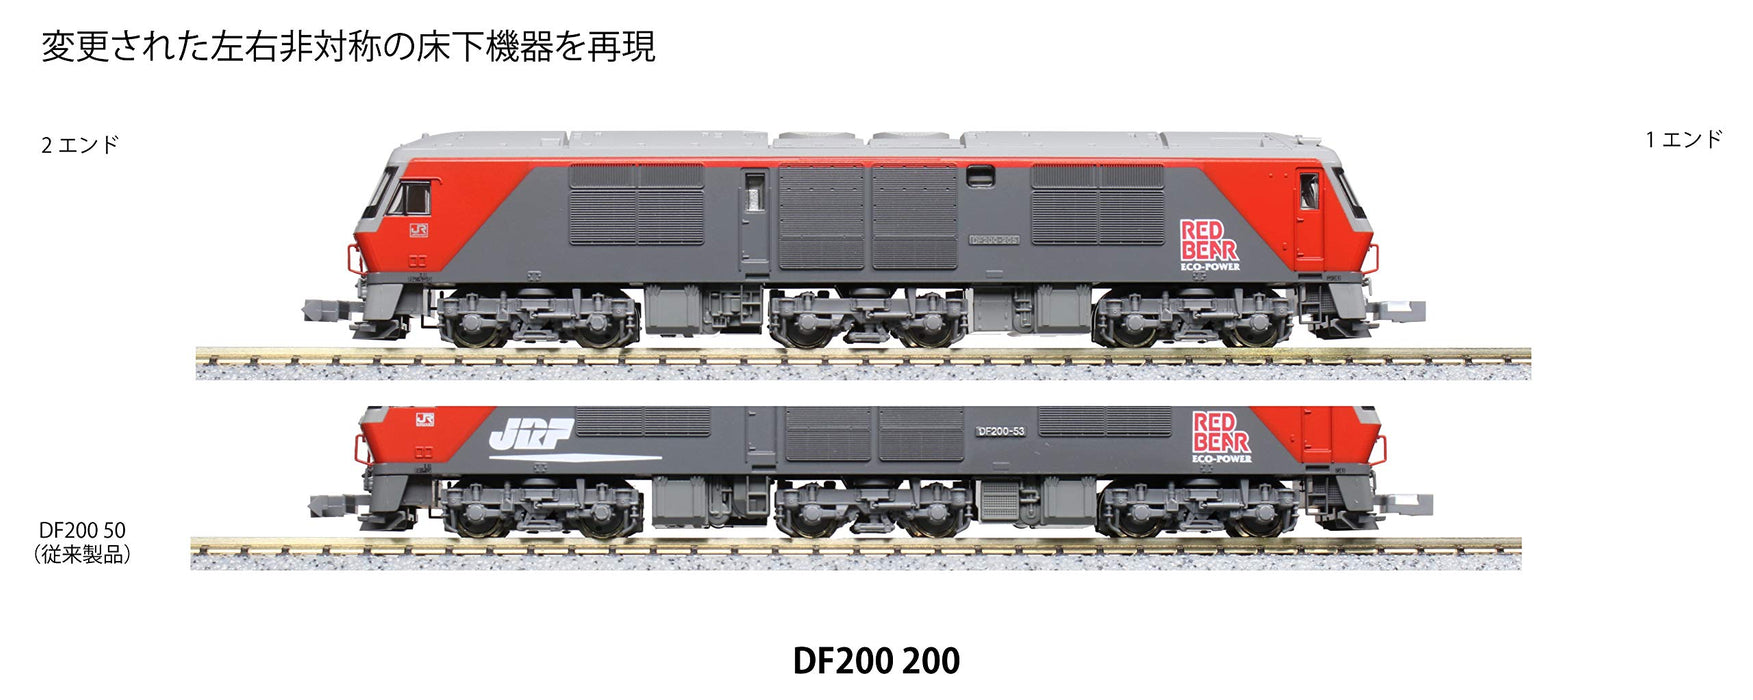 KATO N scale DF200 200 7007-5 Model railroad diesel locomotive 1/150 Plastic NEW_4